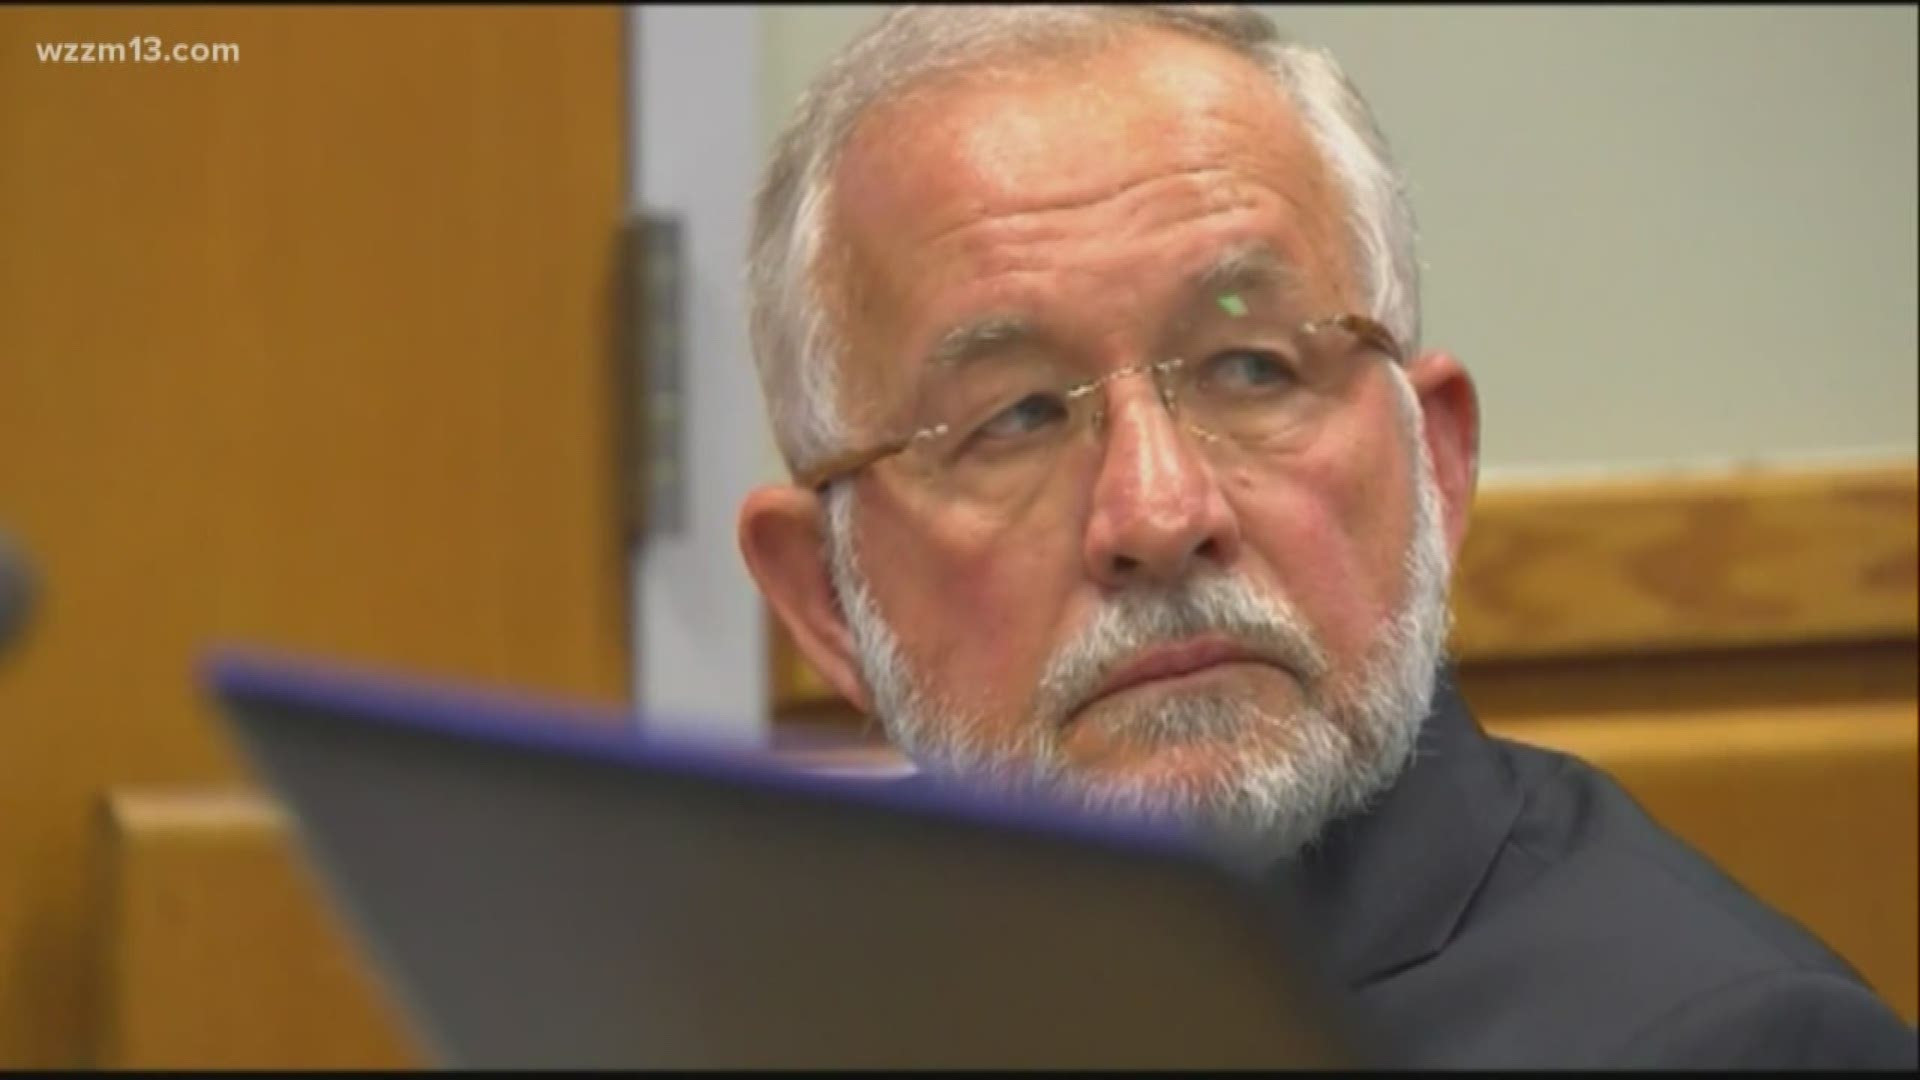 William Strampel in court for prelim hearing